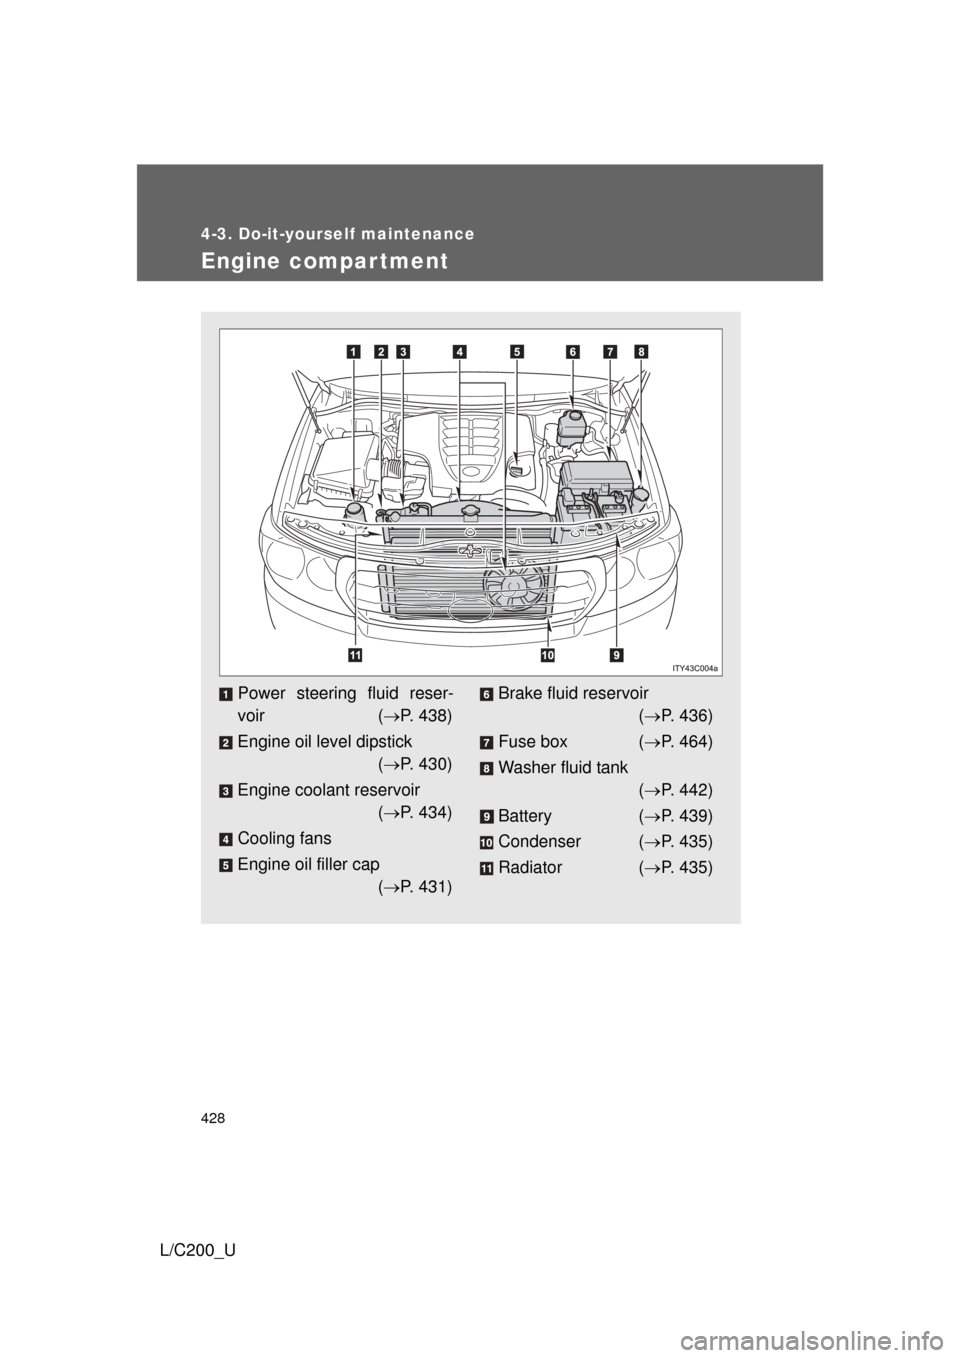 TOYOTA LAND CRUISER 2010 J200 Owners Manual 428
4-3. Do-it-yourself maintenance
L/C200_U
Engine compar tment
Power steering fluid reser-
voir (P. 438)
Engine oil level dipstick ( P. 430)
Engine coolant reservoir ( P. 434)
Cooling fans
